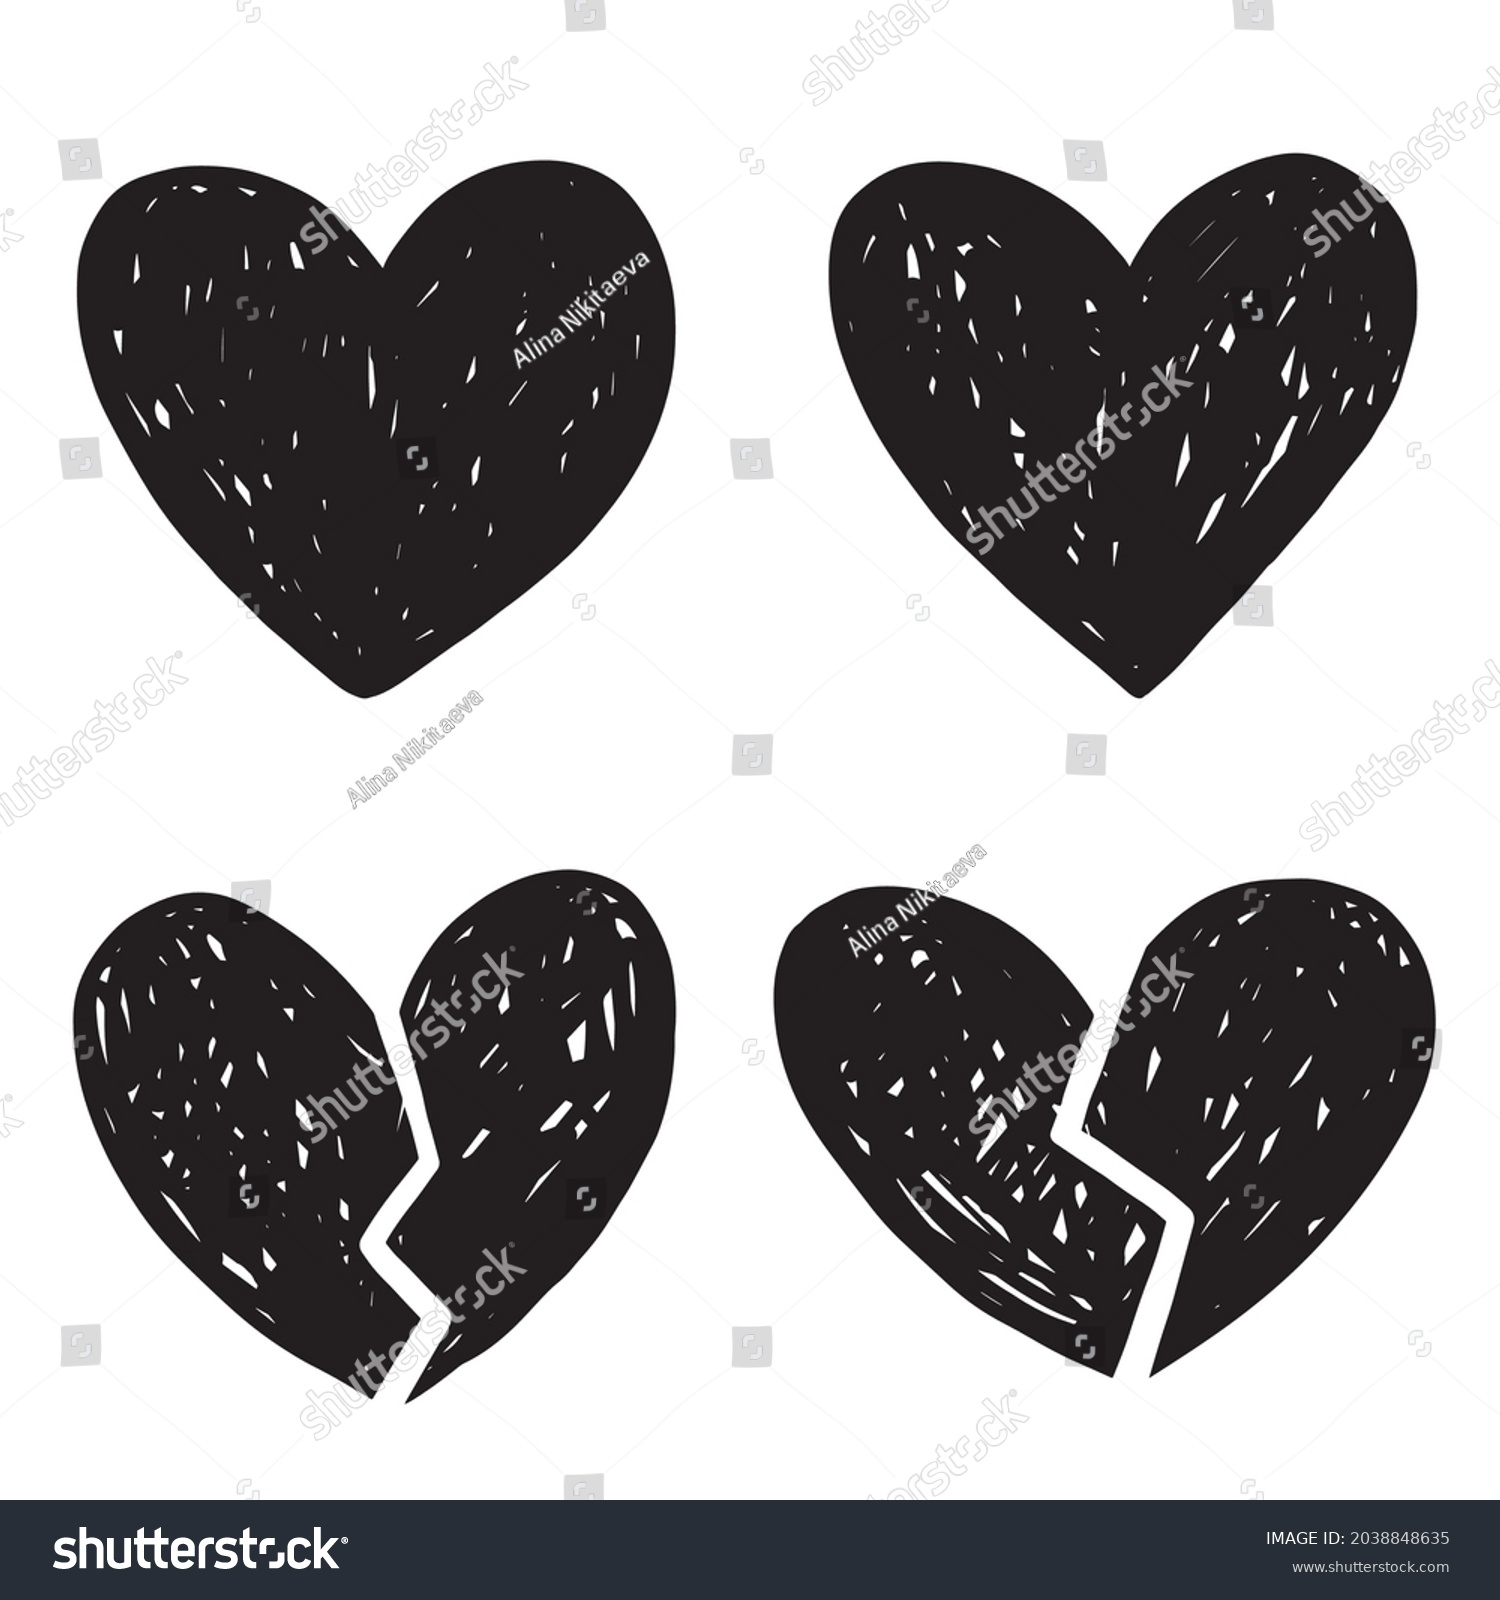 SVG of Vector heart sketch doodle illustration set  with broken heart shape. Black and white monochrome collection svg